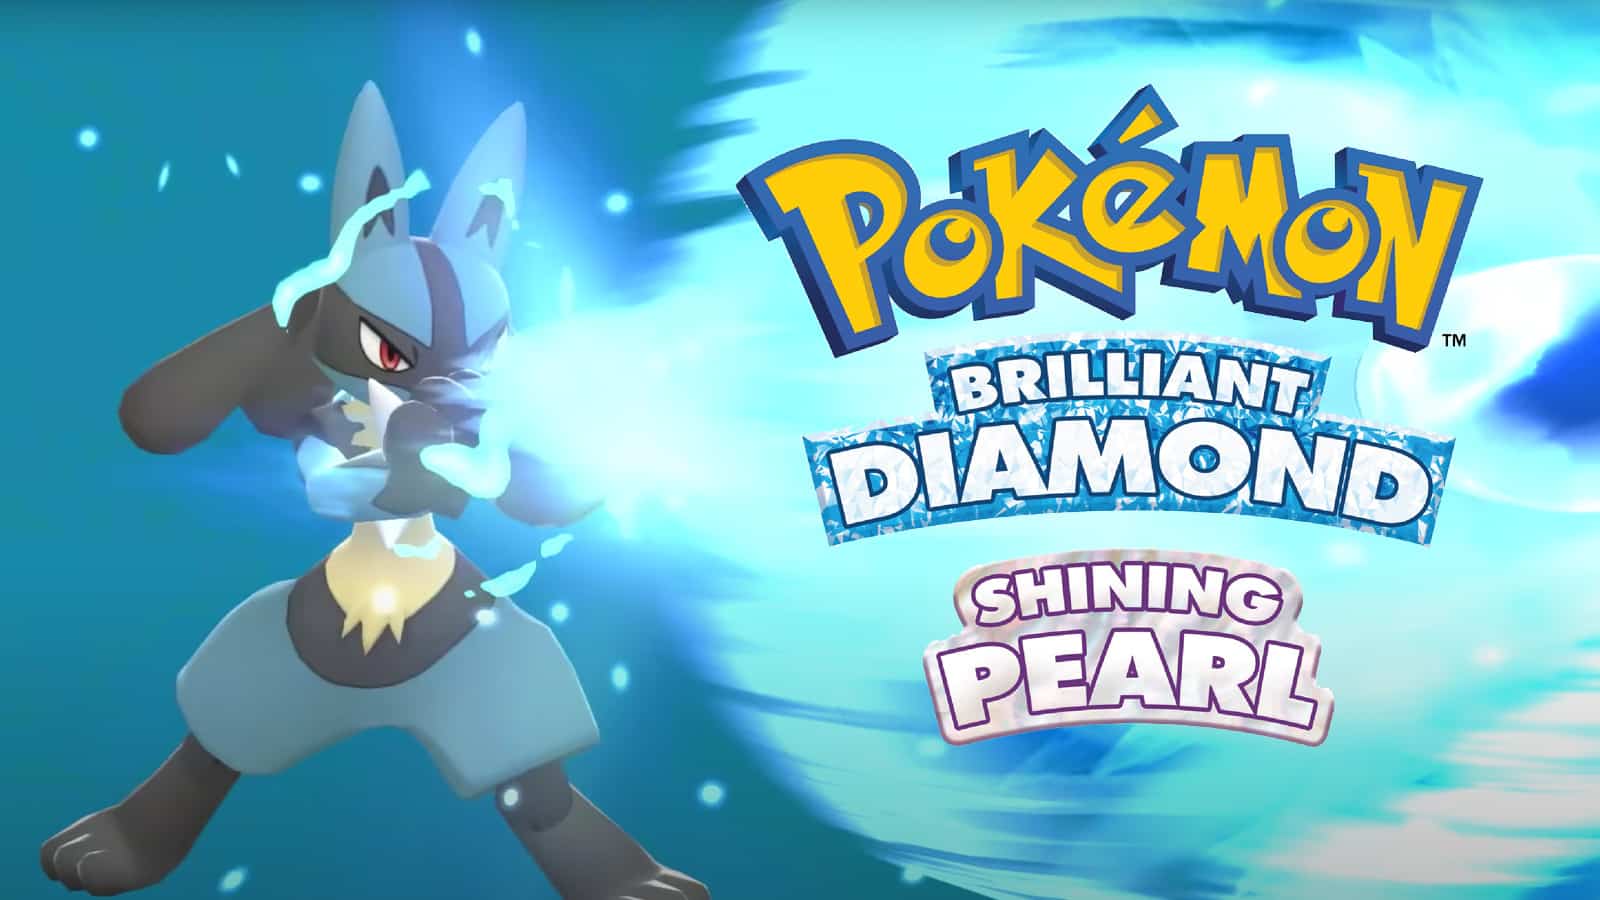 Pokémon Brilliant Diamond Shining Pearl version differences, exclusive  Pokémon and new features